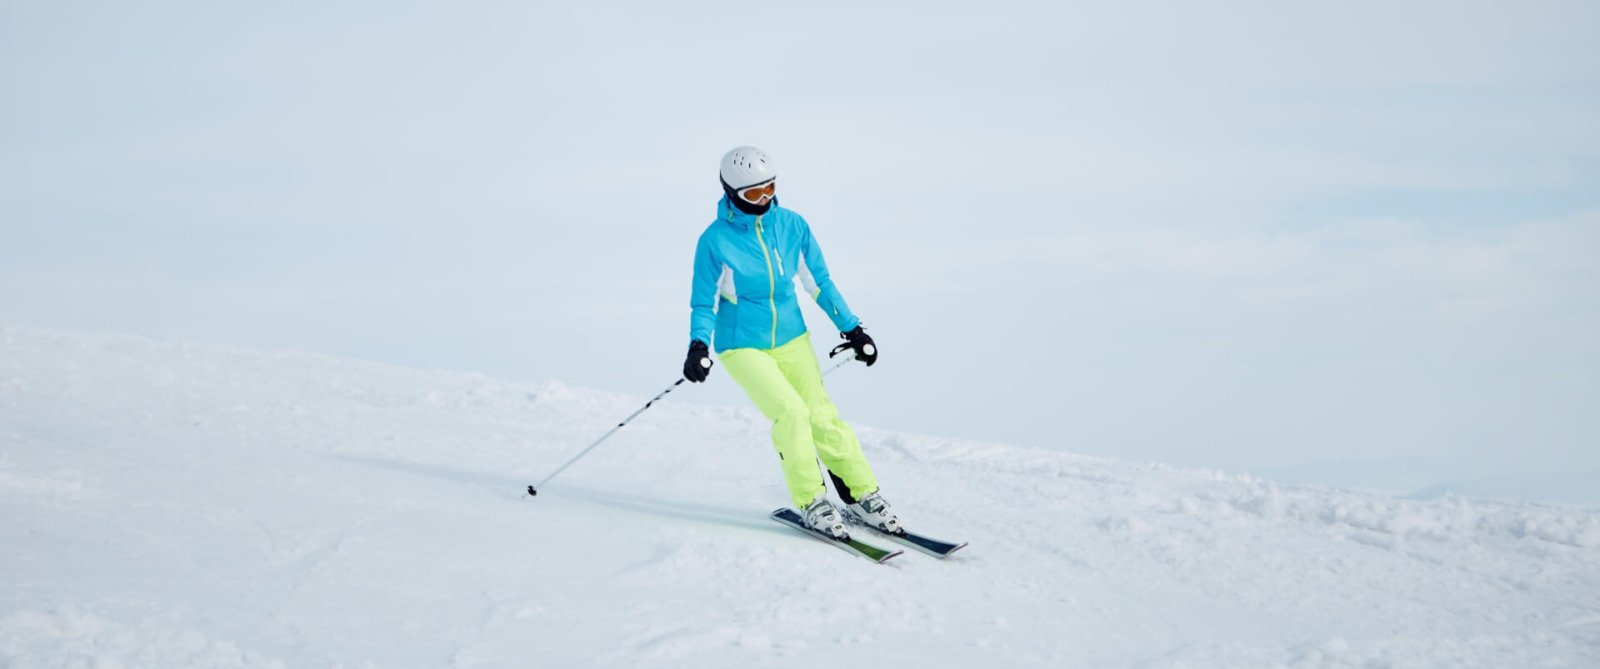 ski-banner-edit